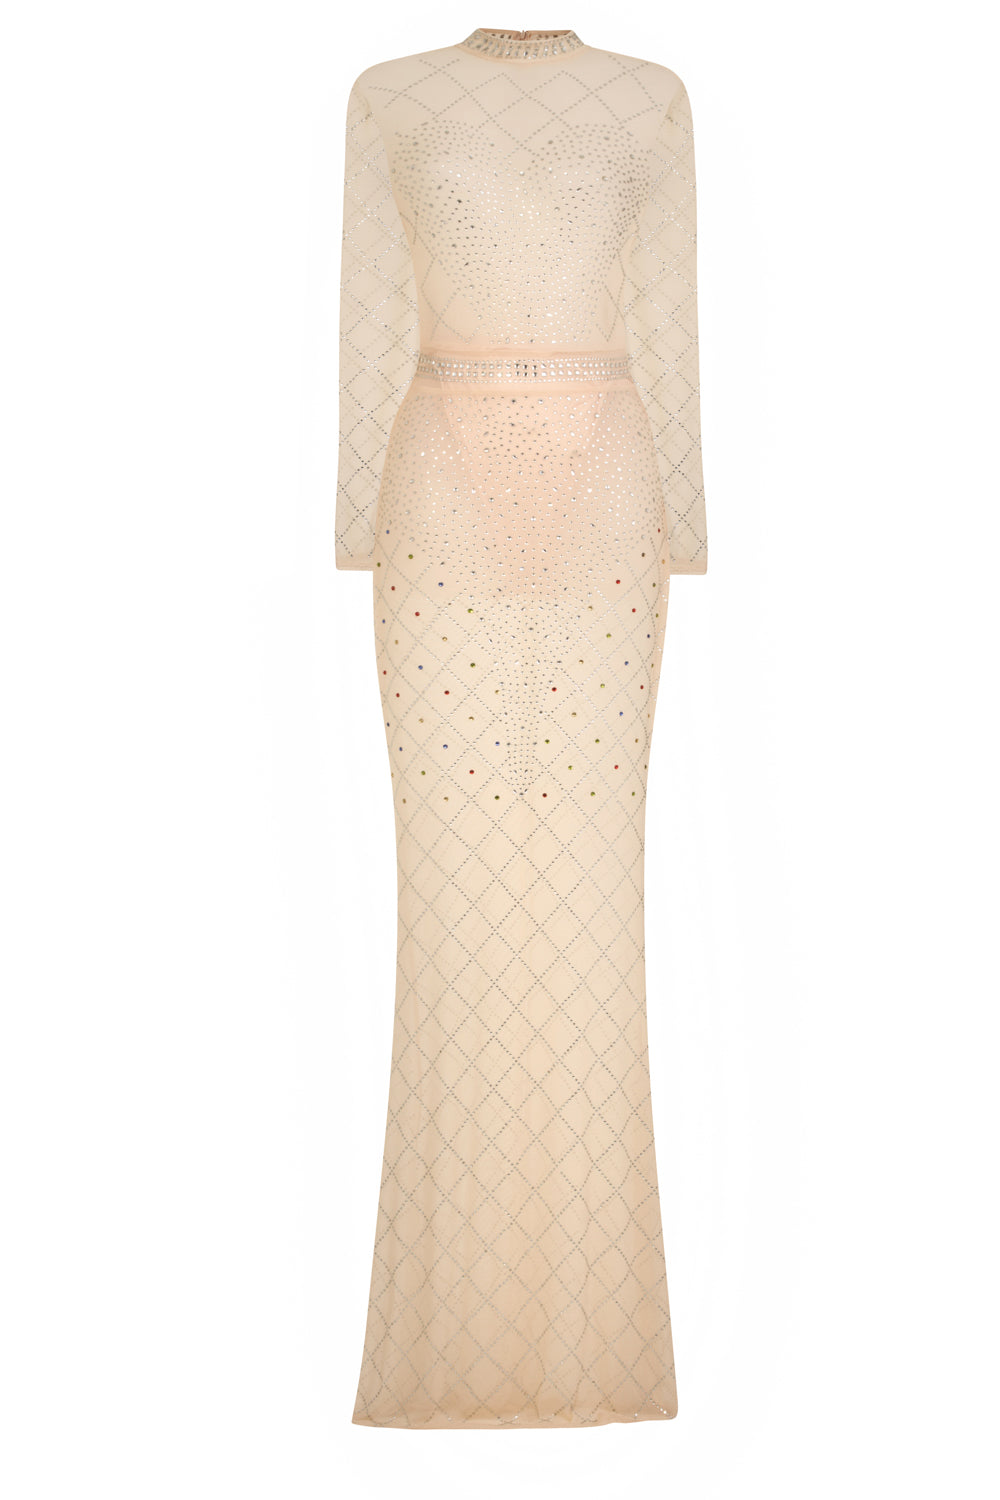 Sheer Dreams Nude Crystal Rhinestone Mesh Transparent Maxi Dress